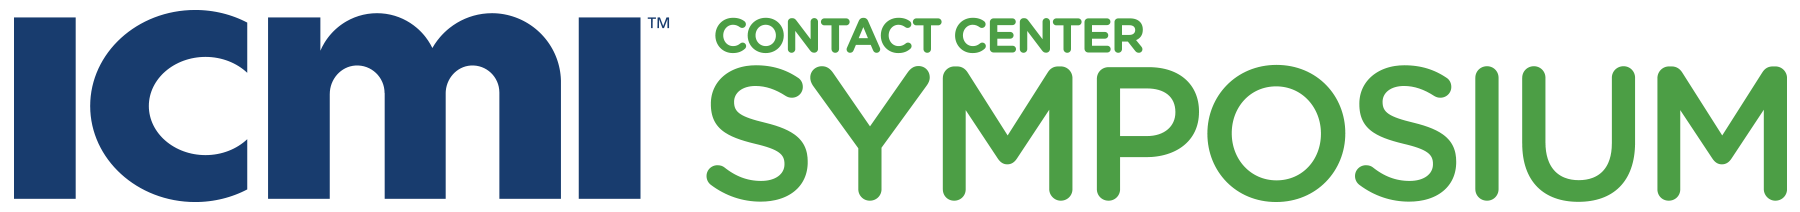 ICMI Contact Center Symposium Logo